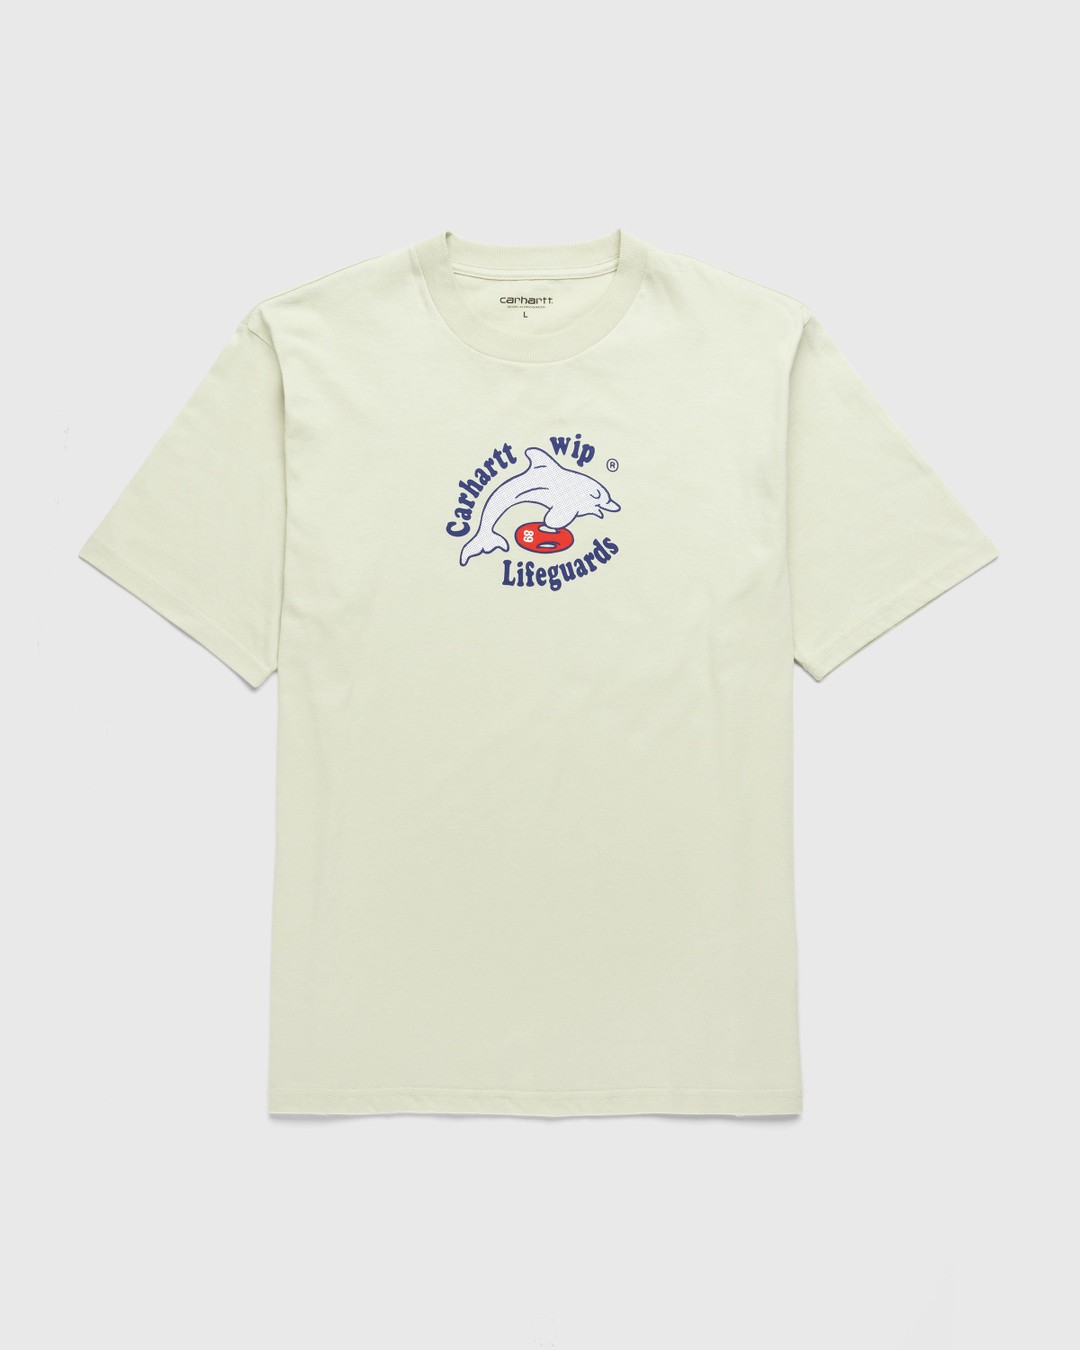 Carhartt WIP – Lifeguards T-Shirt Light Blue - Tops - White - Image 1